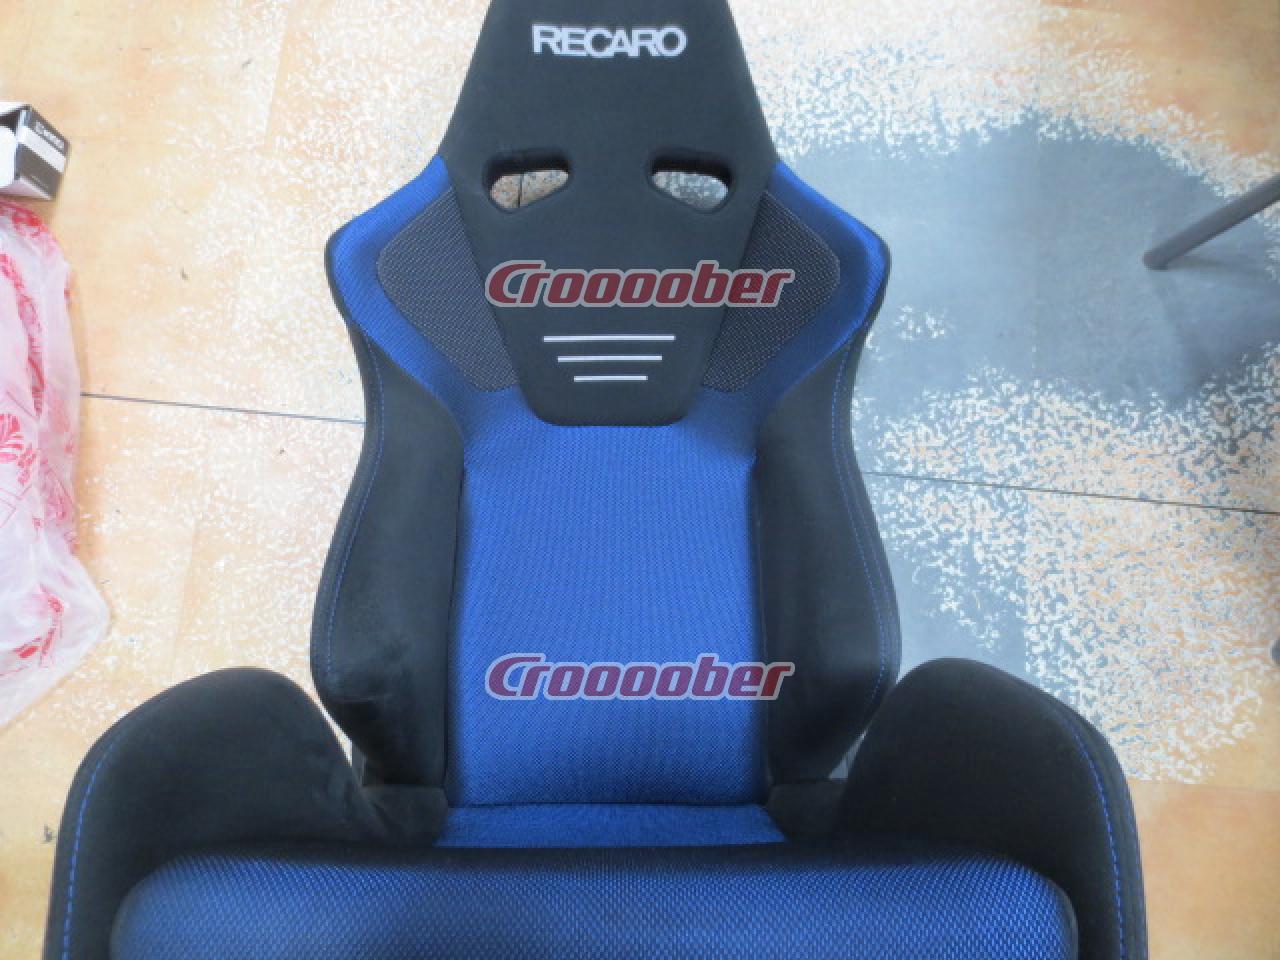 RECARO SR-6 GK 100 S BL Reclining Seats(RECARO) Croooober